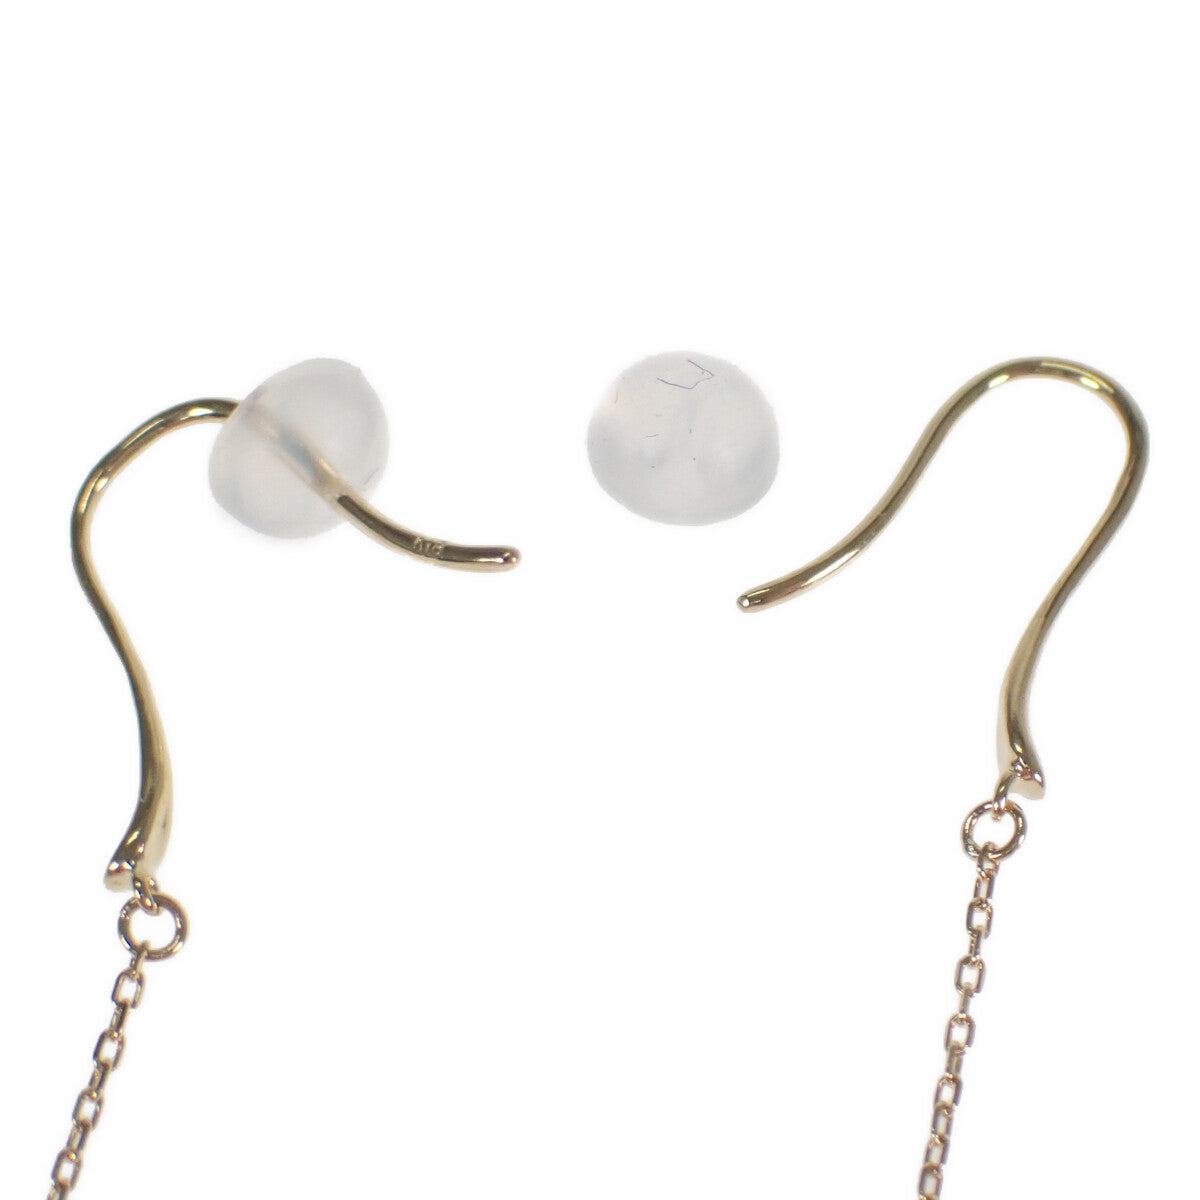 Ladies' K18YG Long Ball Design Gold Earrings – Used